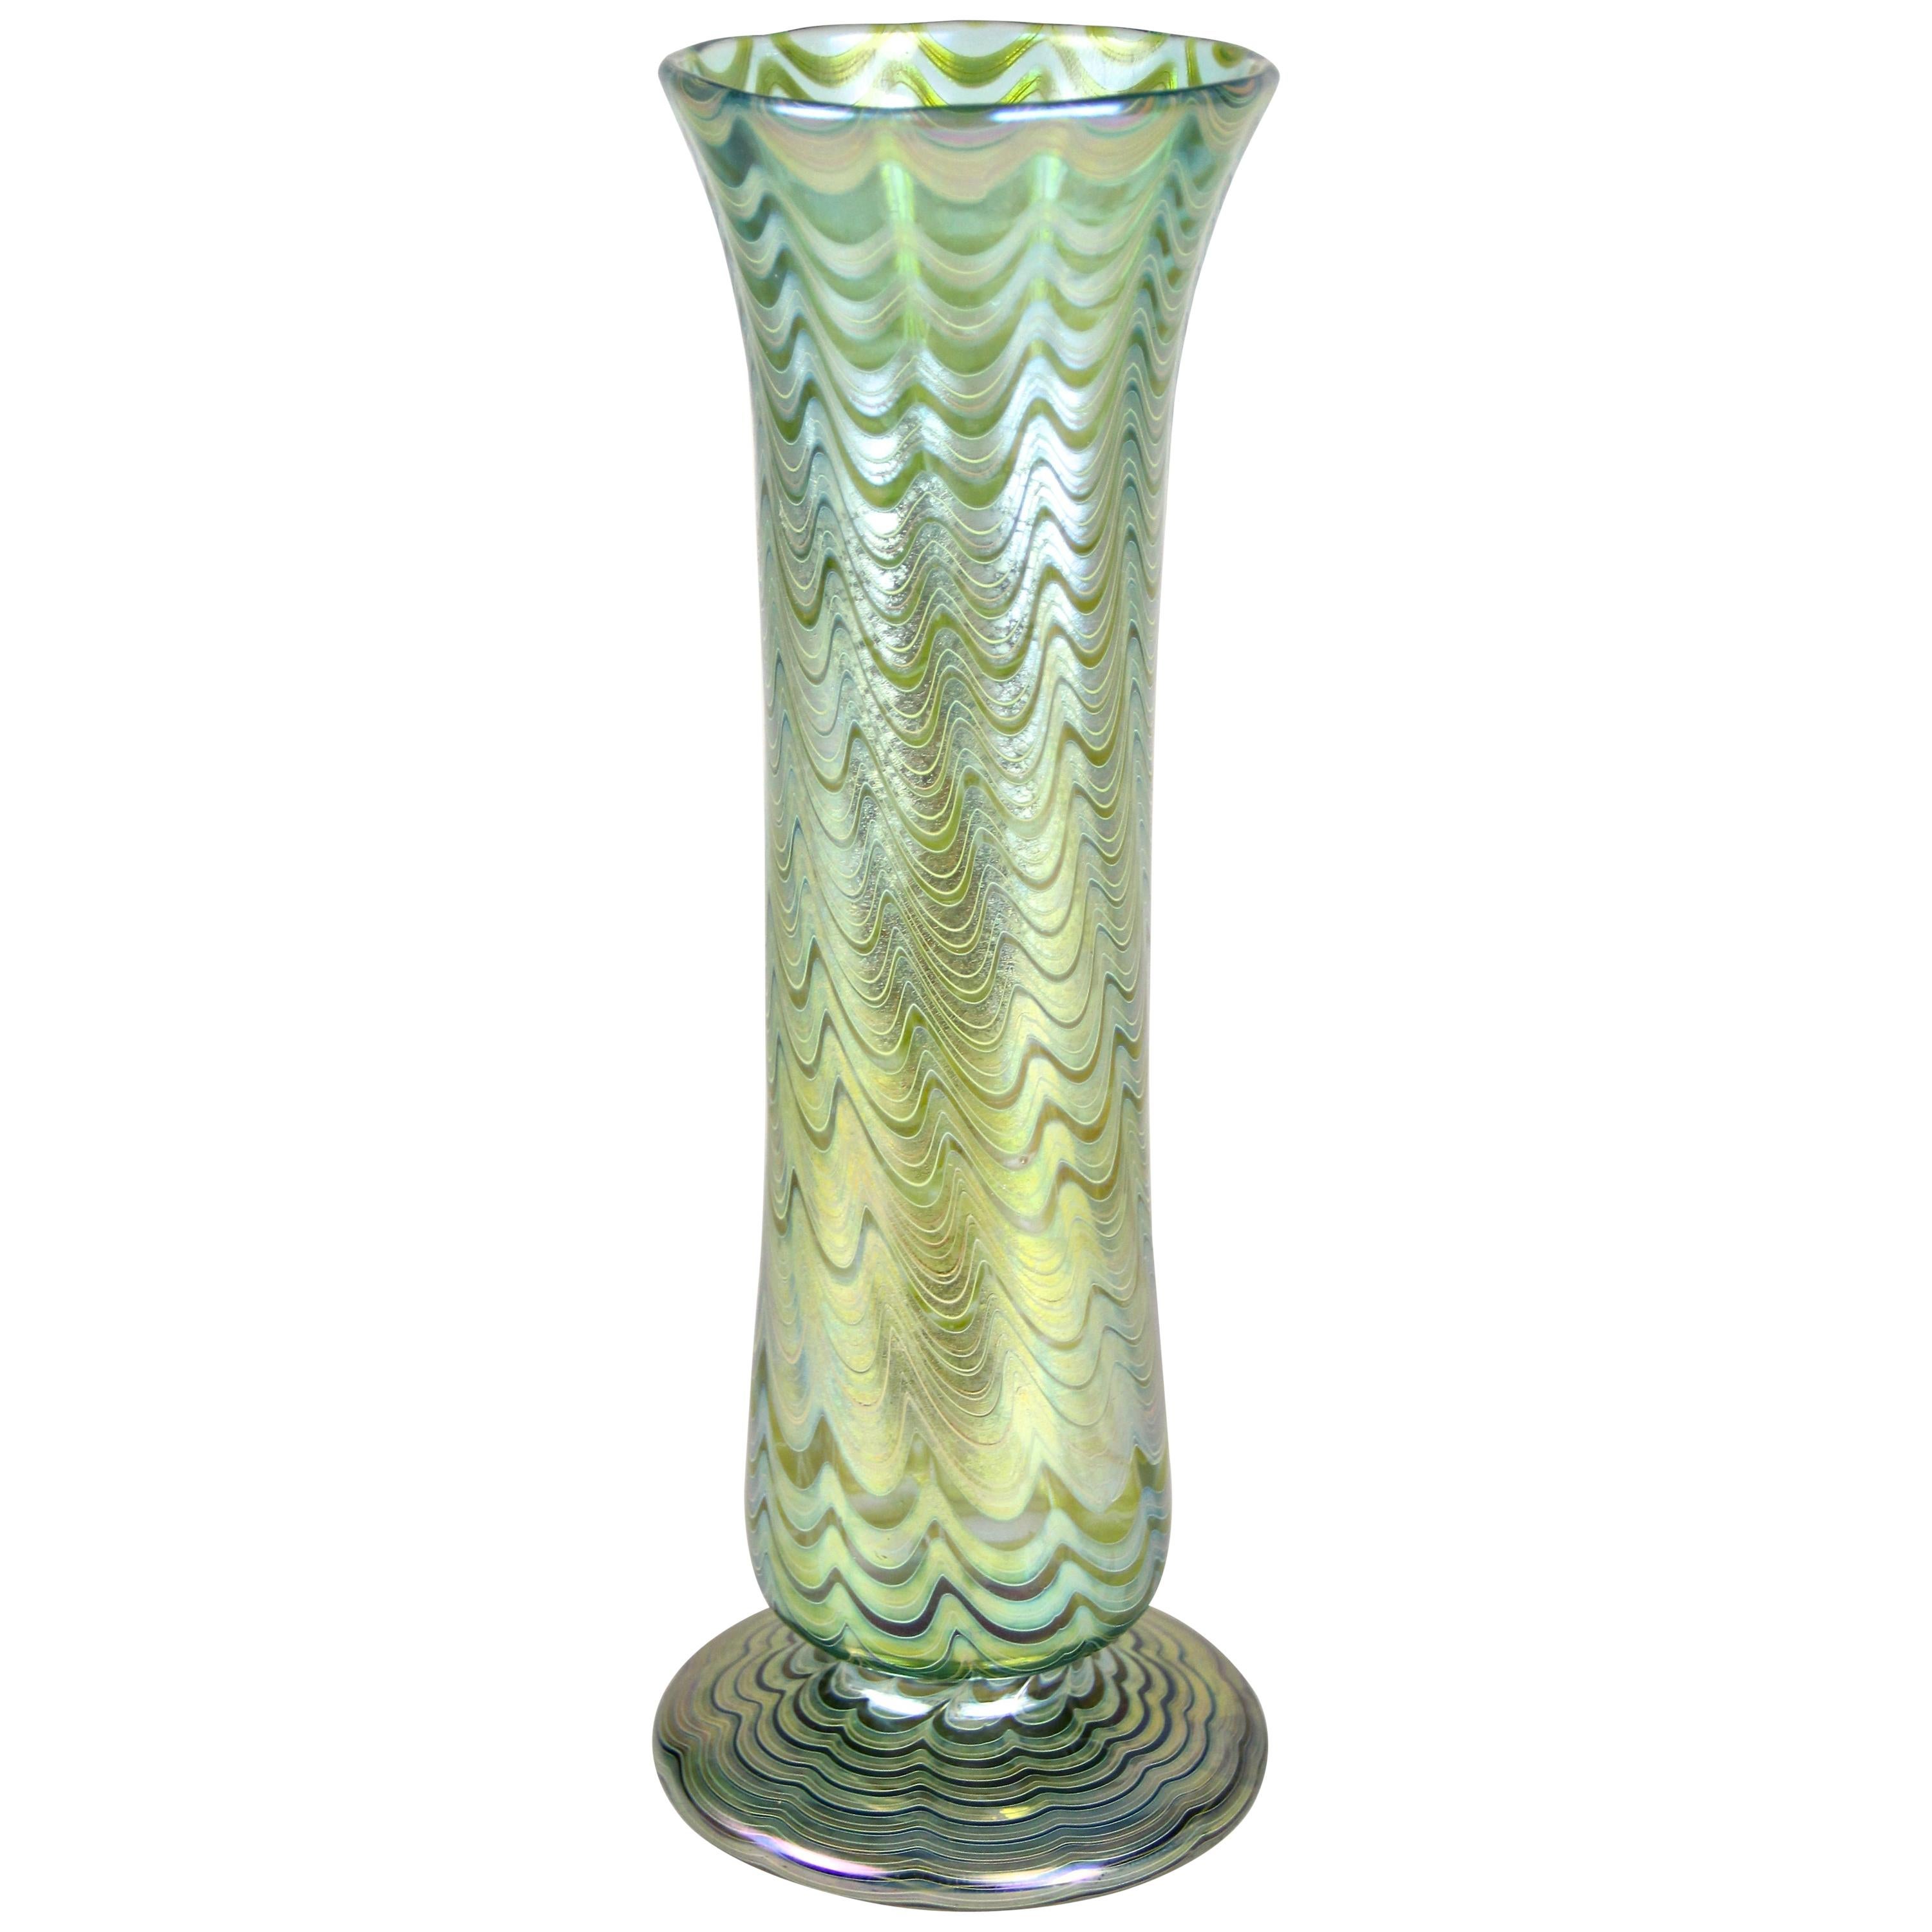 Loetz Witwe Glass Vase Phaenomen Genre 6893 Green, Bohemia, circa 1899